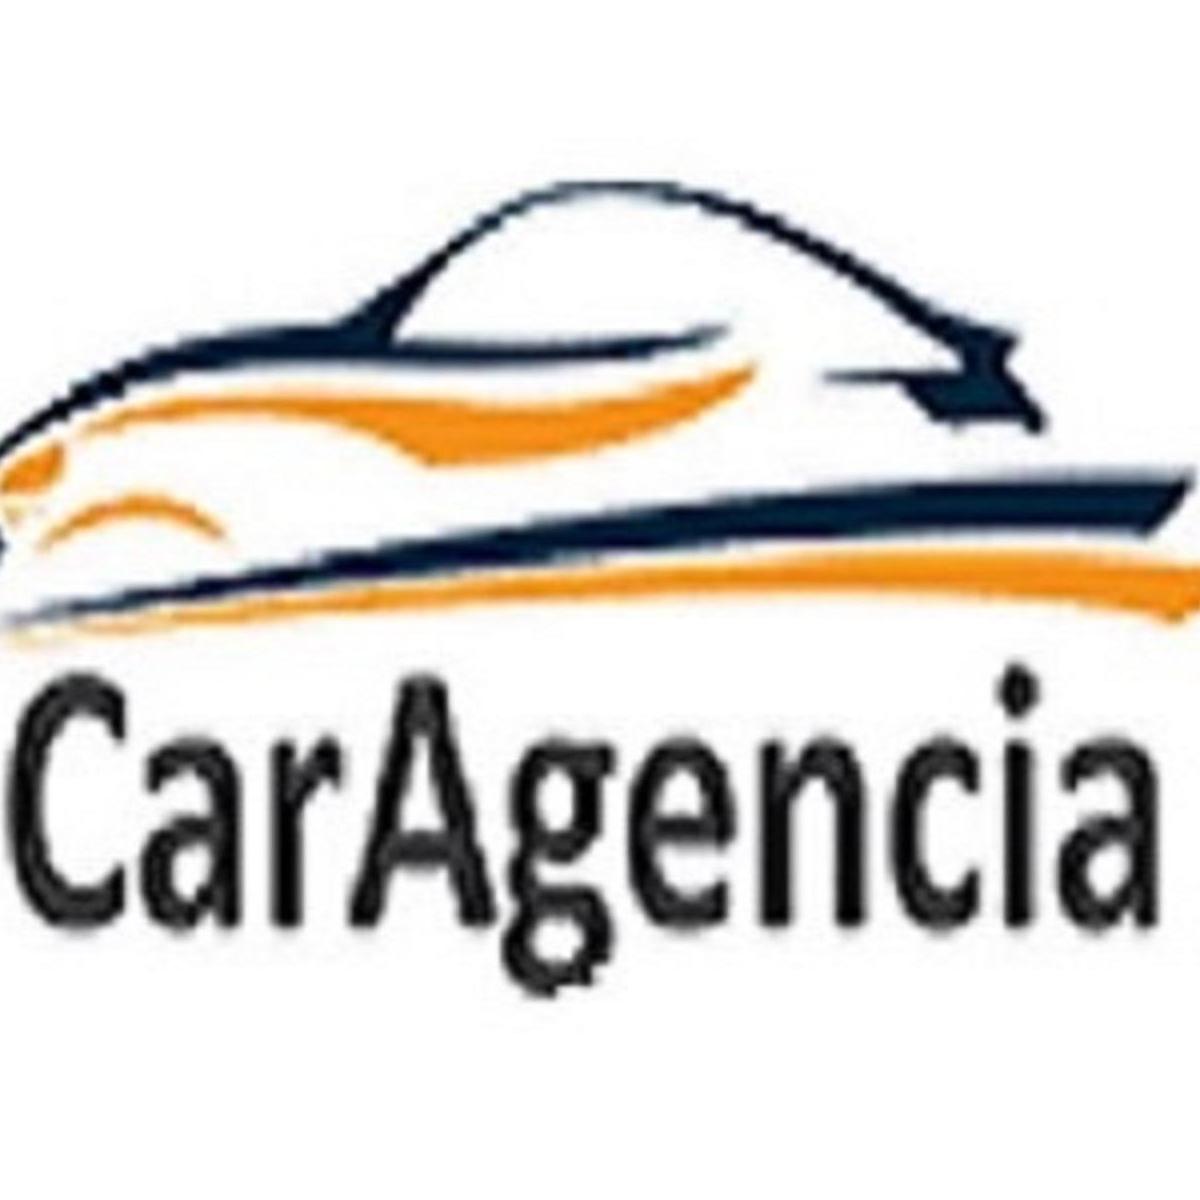 CarAgencia car